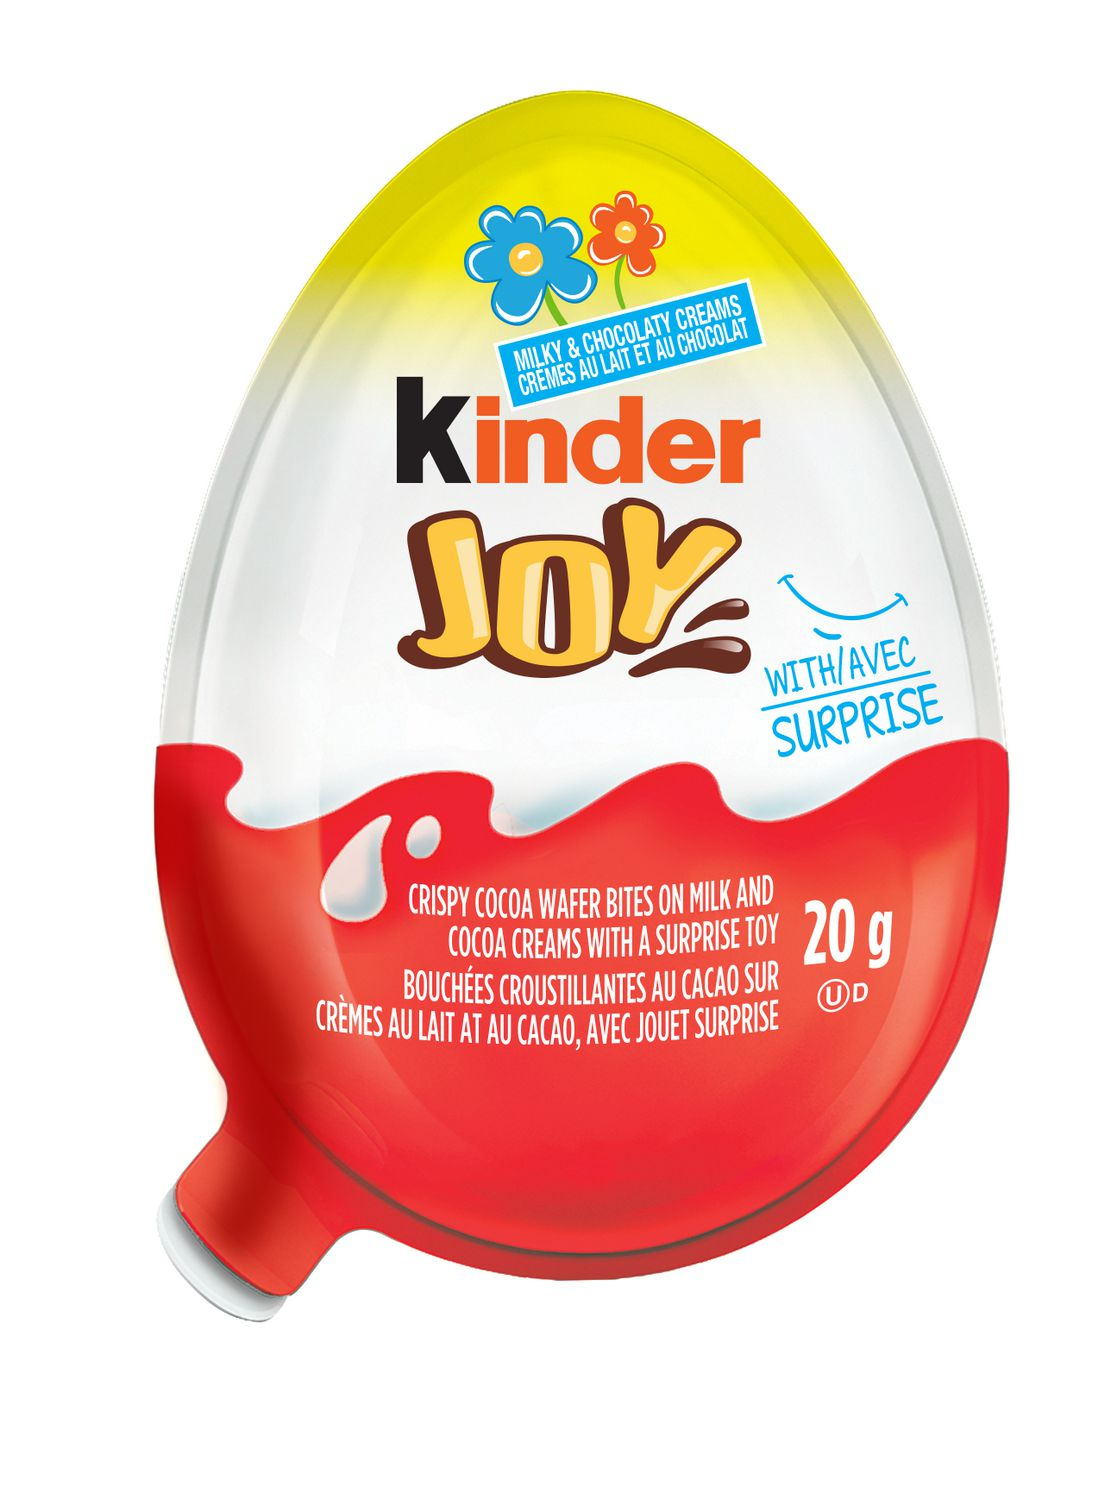 Kinder Joy | Walmart Canada bei Kinder Joy Image,